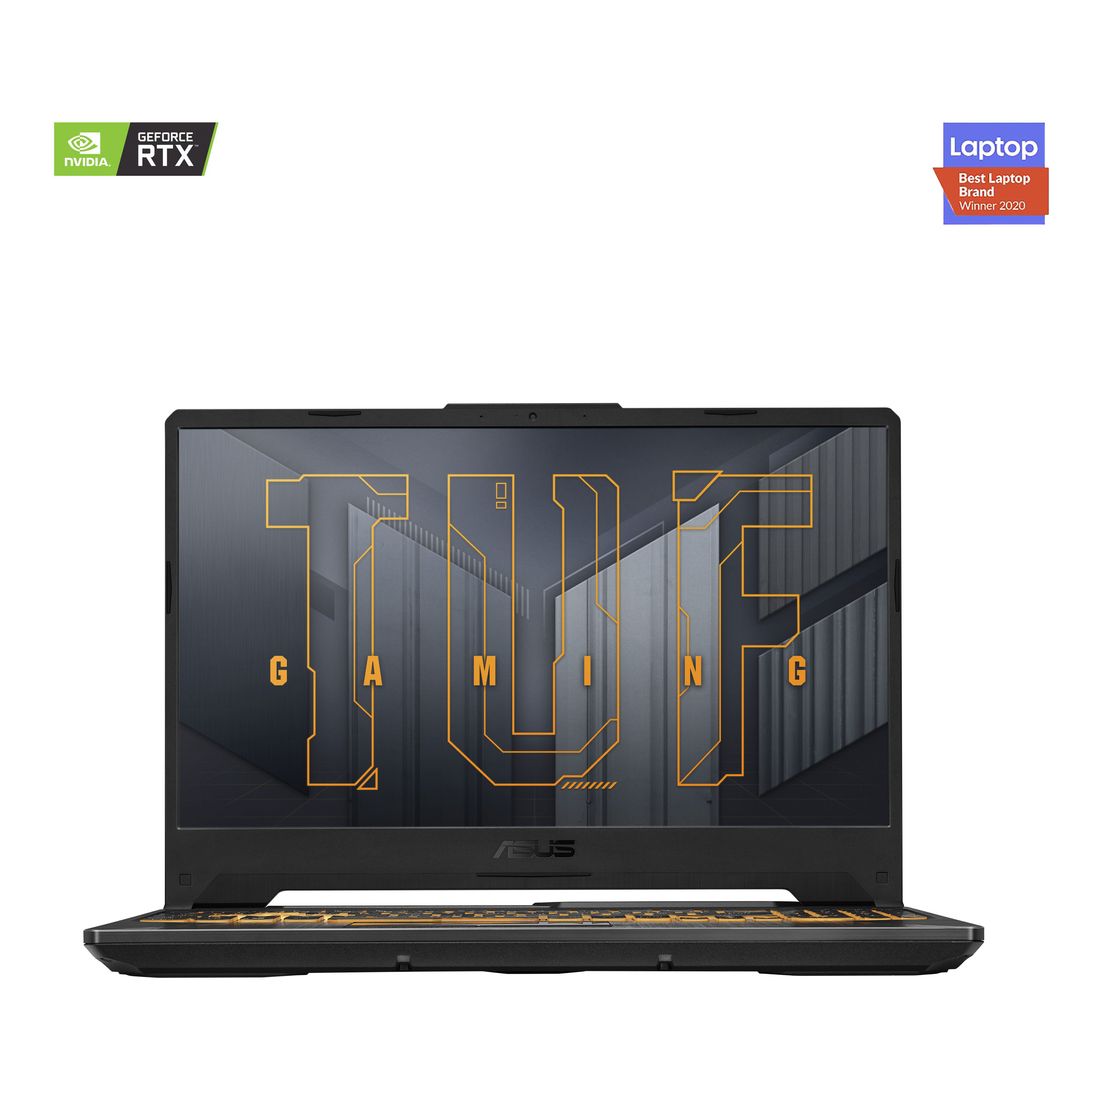 ASUS TUF Gaming F15 Gaming Laptop i7-11800H/16GB/1TB SSD/GeForce RTX 3060 6GB/15.6 FHD/240Hz/Windows 10 Home/Eclipse Grey